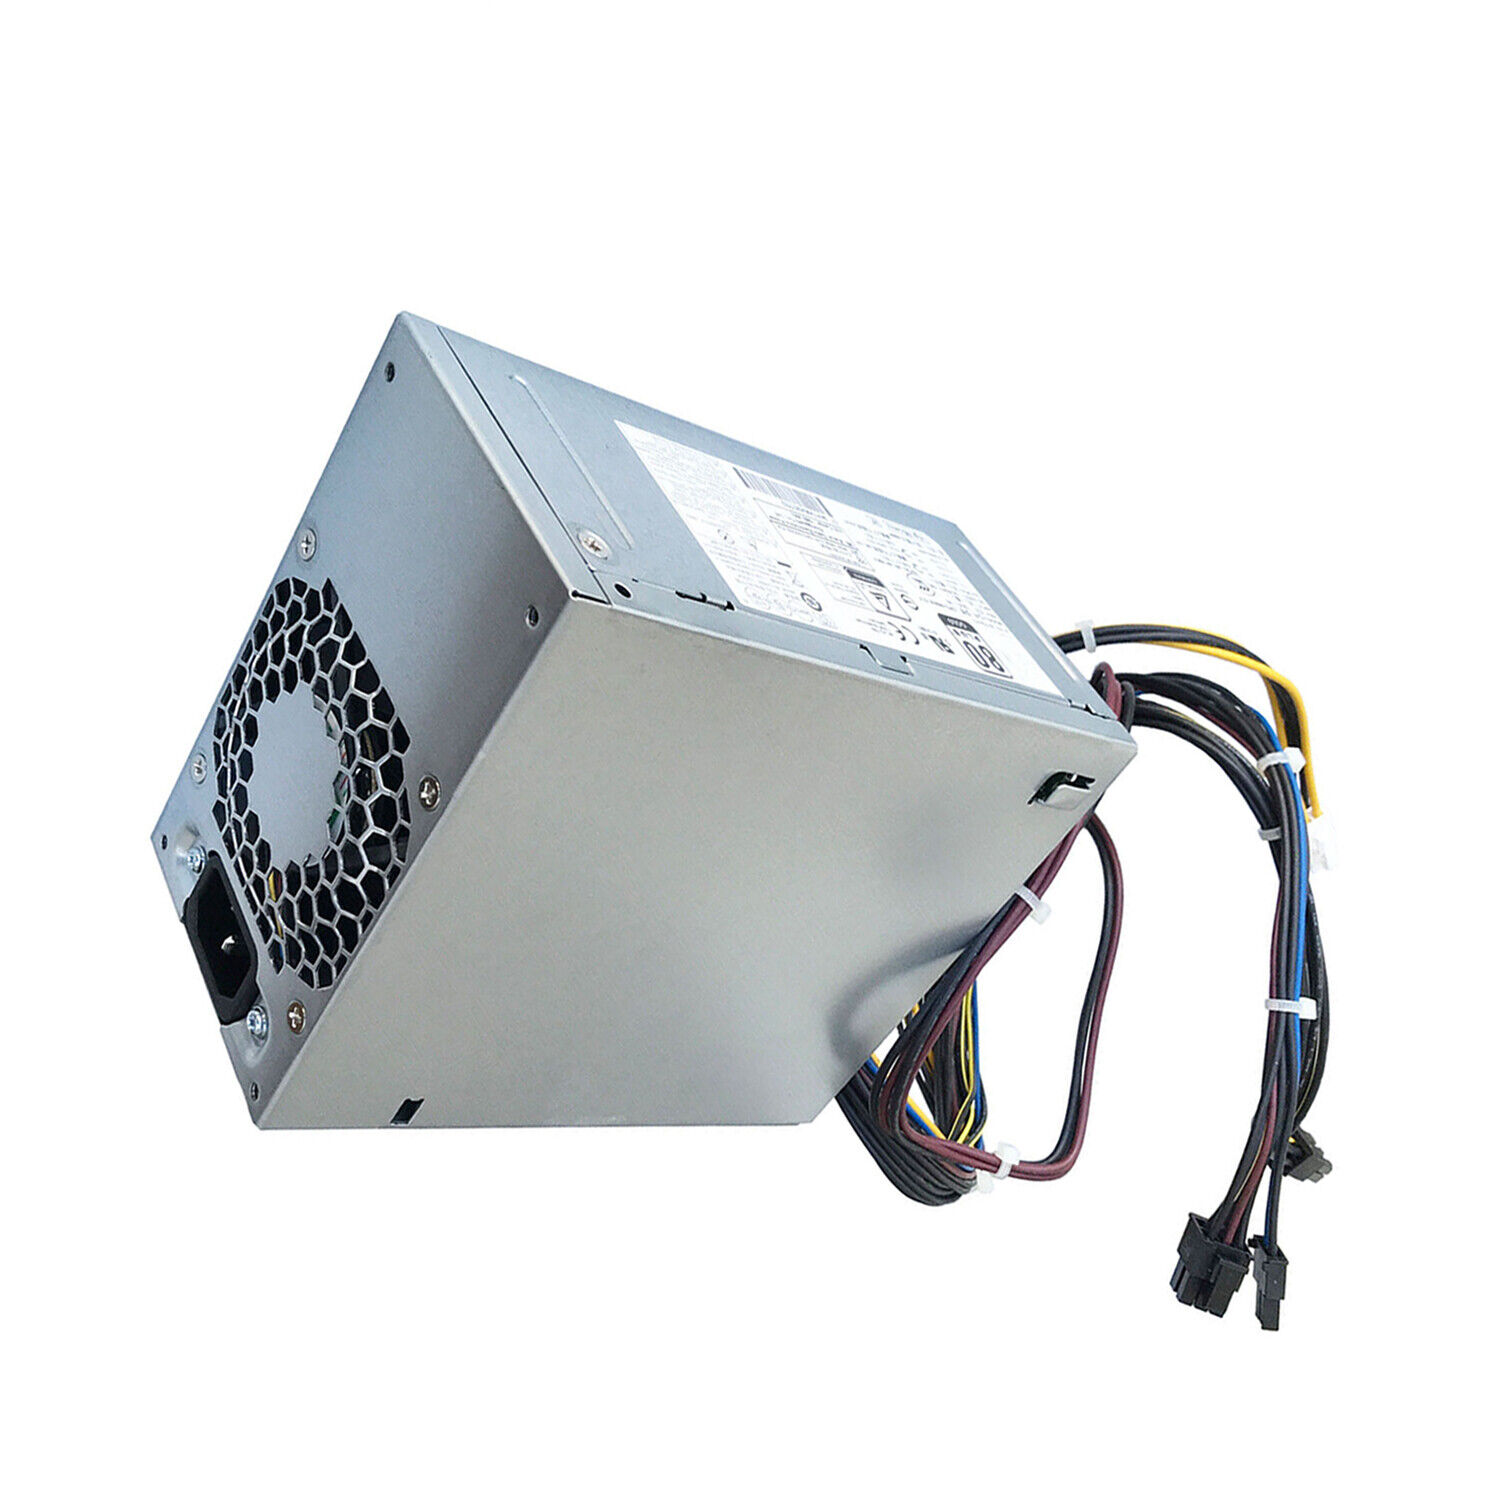 L05757-800 New Power Supply PSU 500W For HP ENVY Desktop - 795-0003UR L05757-800